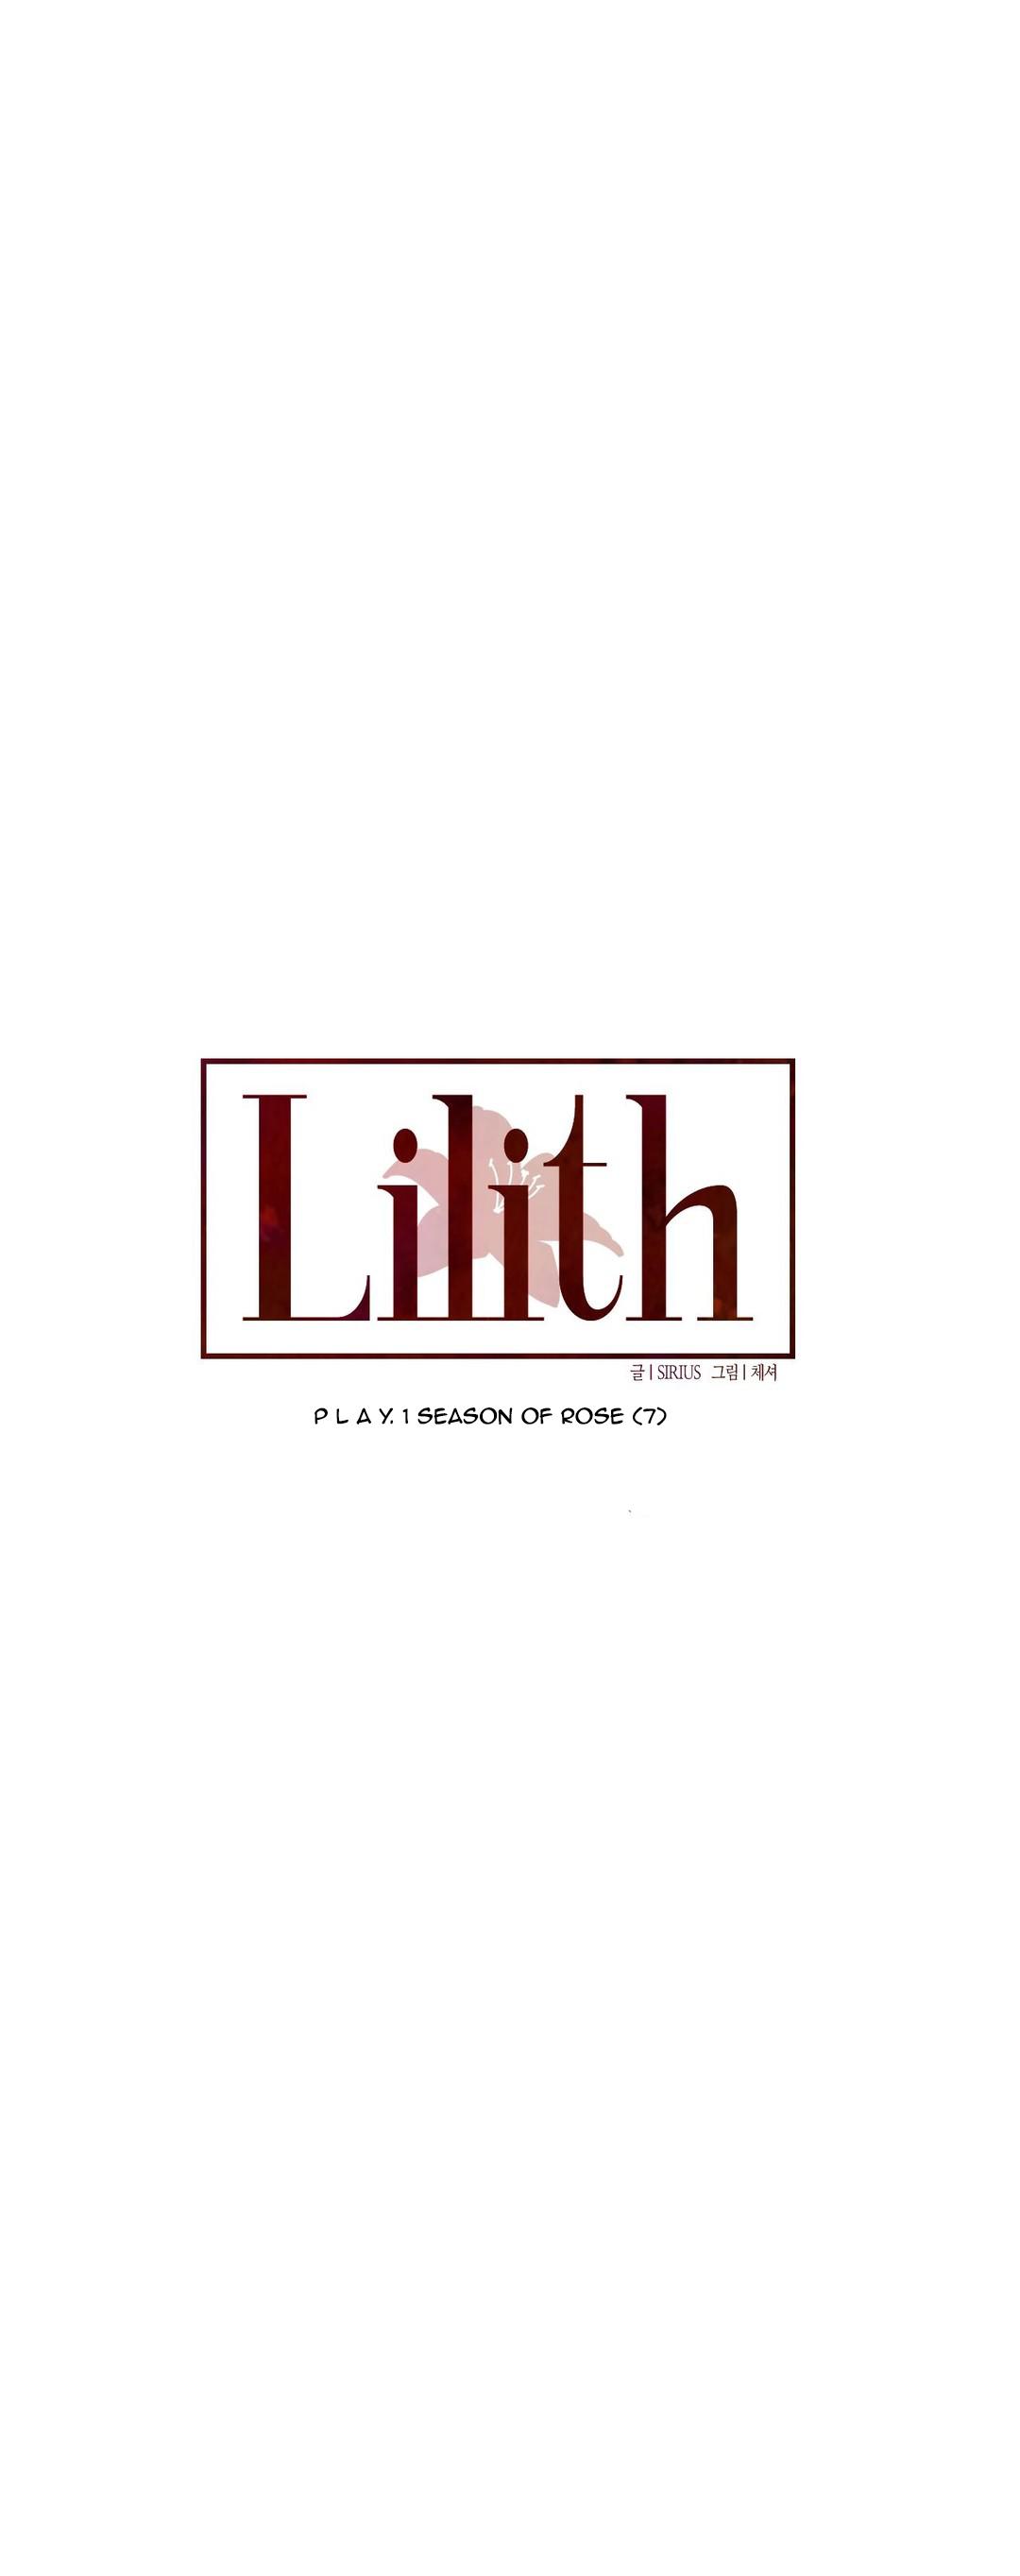 Lilith image